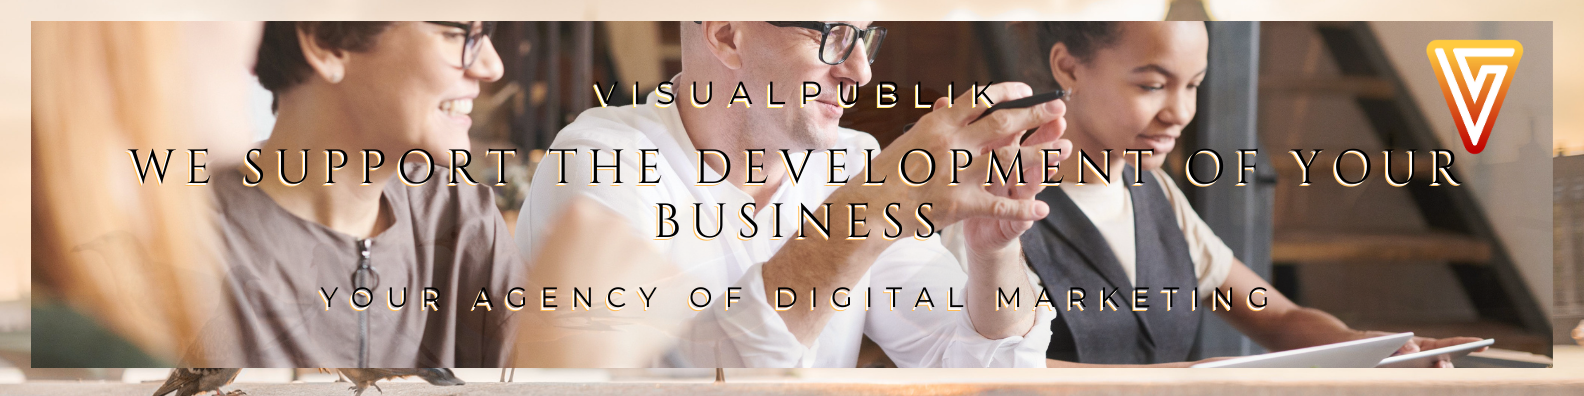 Visualpublik tu agencia de marketing Digital